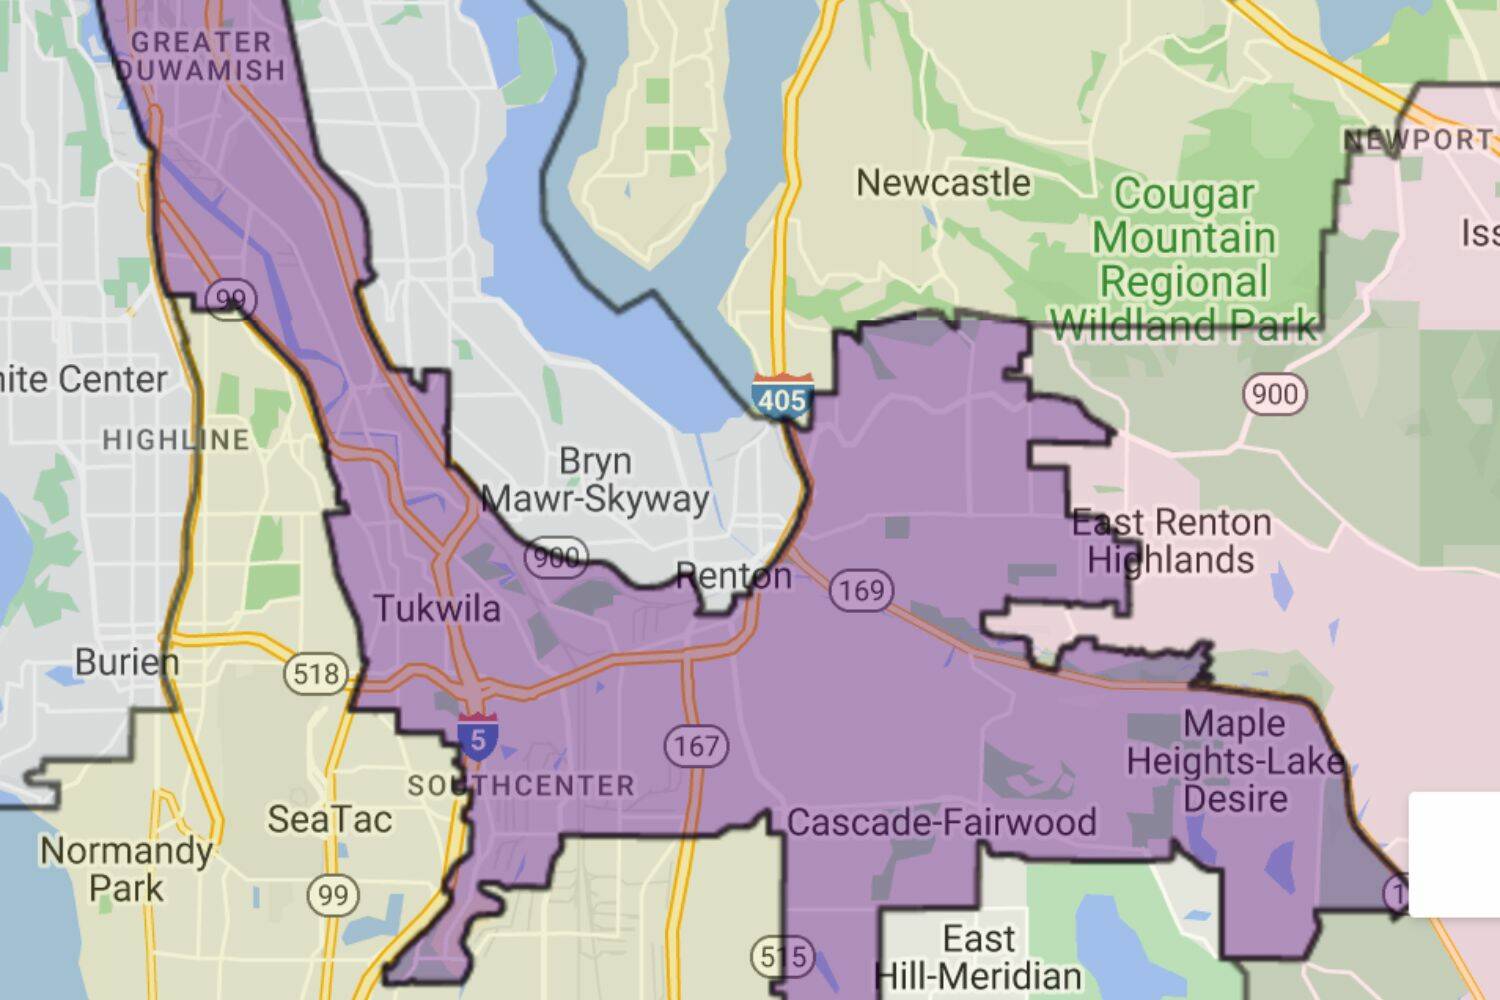 The purple zone indicates Washington’s Legislative District No. 11 (Screenshot from https://leg.wa.gov/)